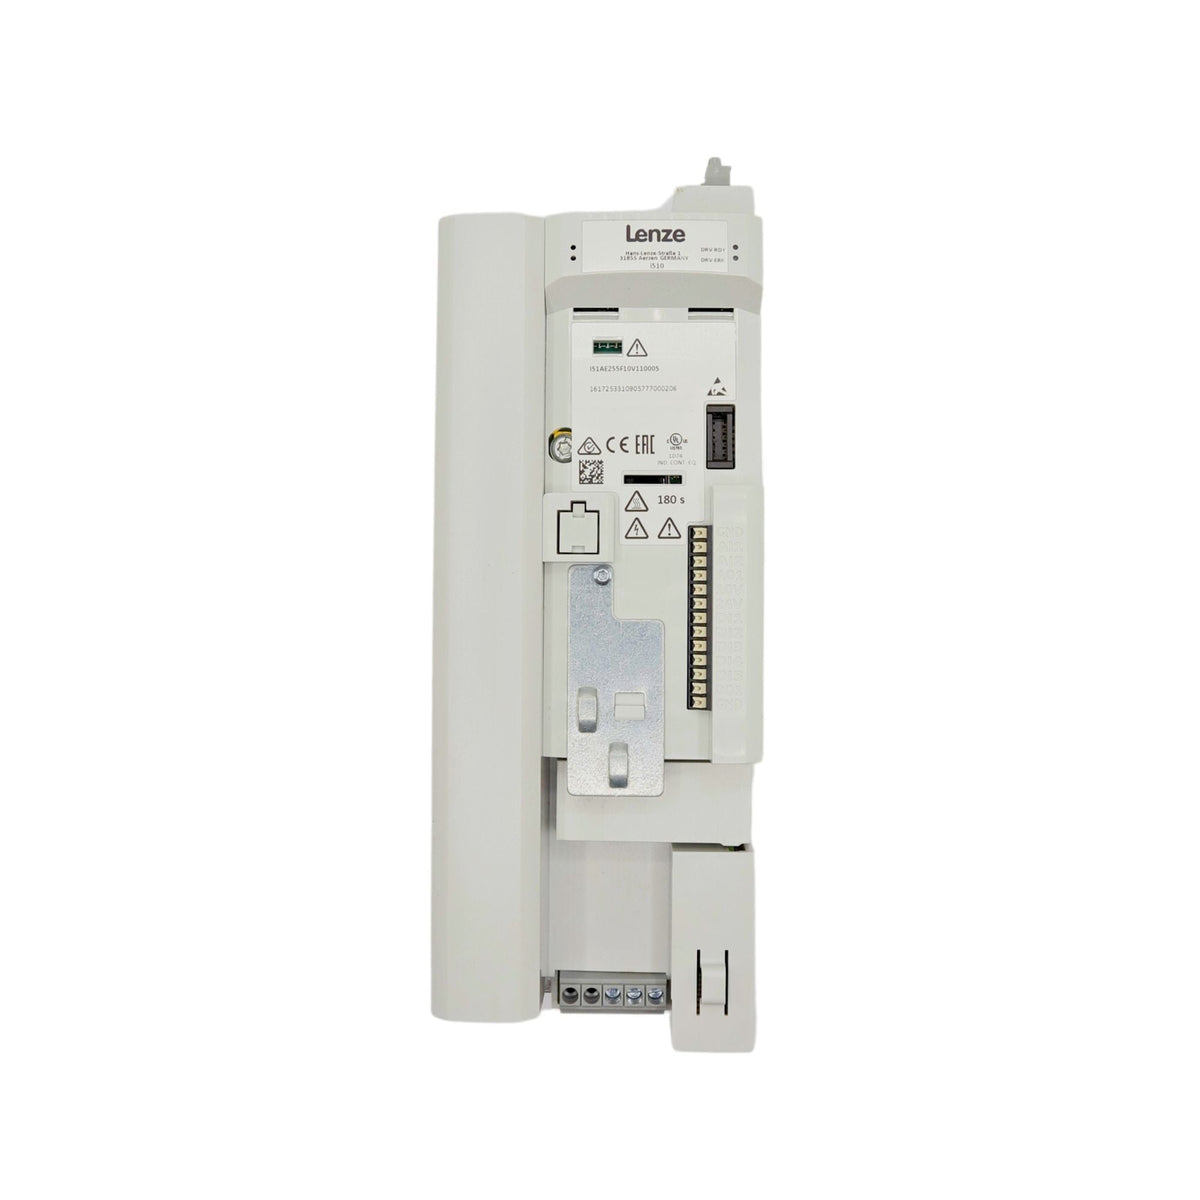 Lenze | i510 7.5hp Cabinet mount 480volt 5digital inputs, 2 analog inputs, 1 digital output 1 analog Output, 1 relay | I51AE255F10V11000S - front view